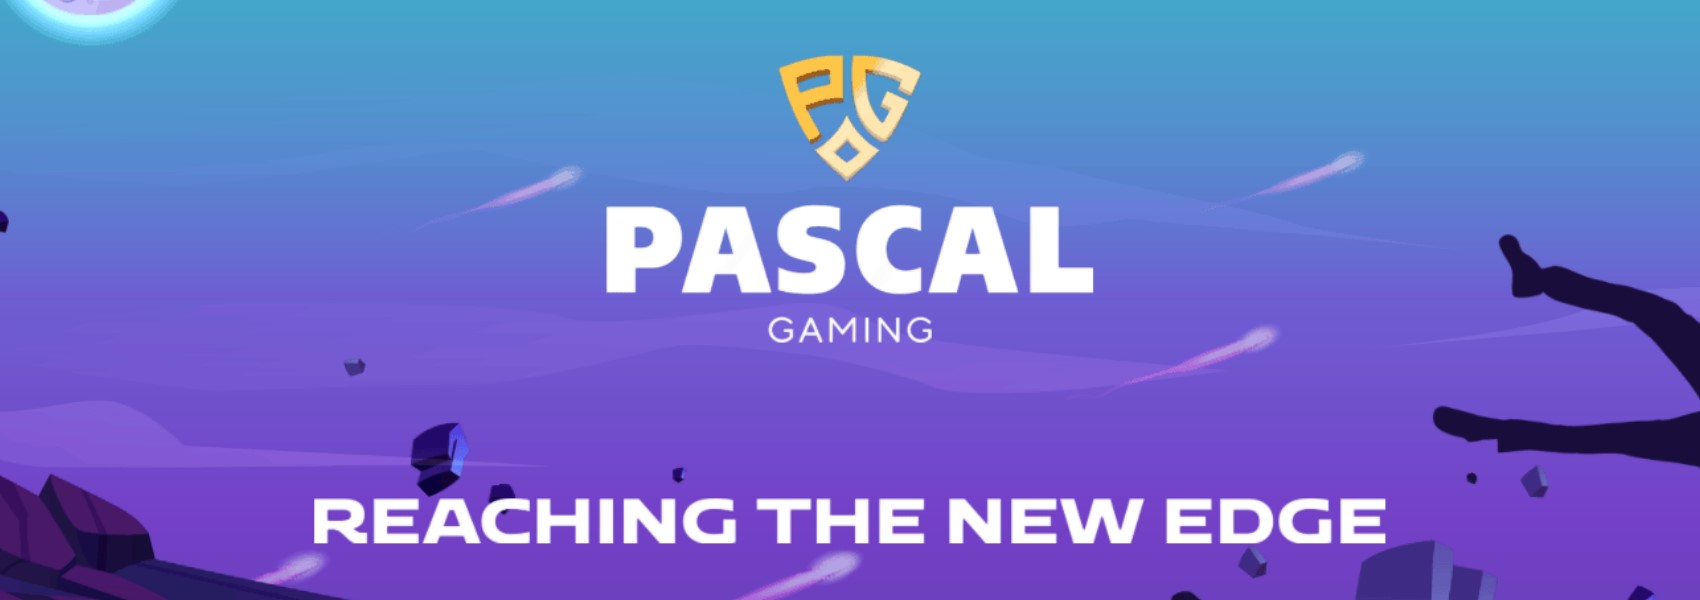 Pascal Gaming રમત પ્રદાતા